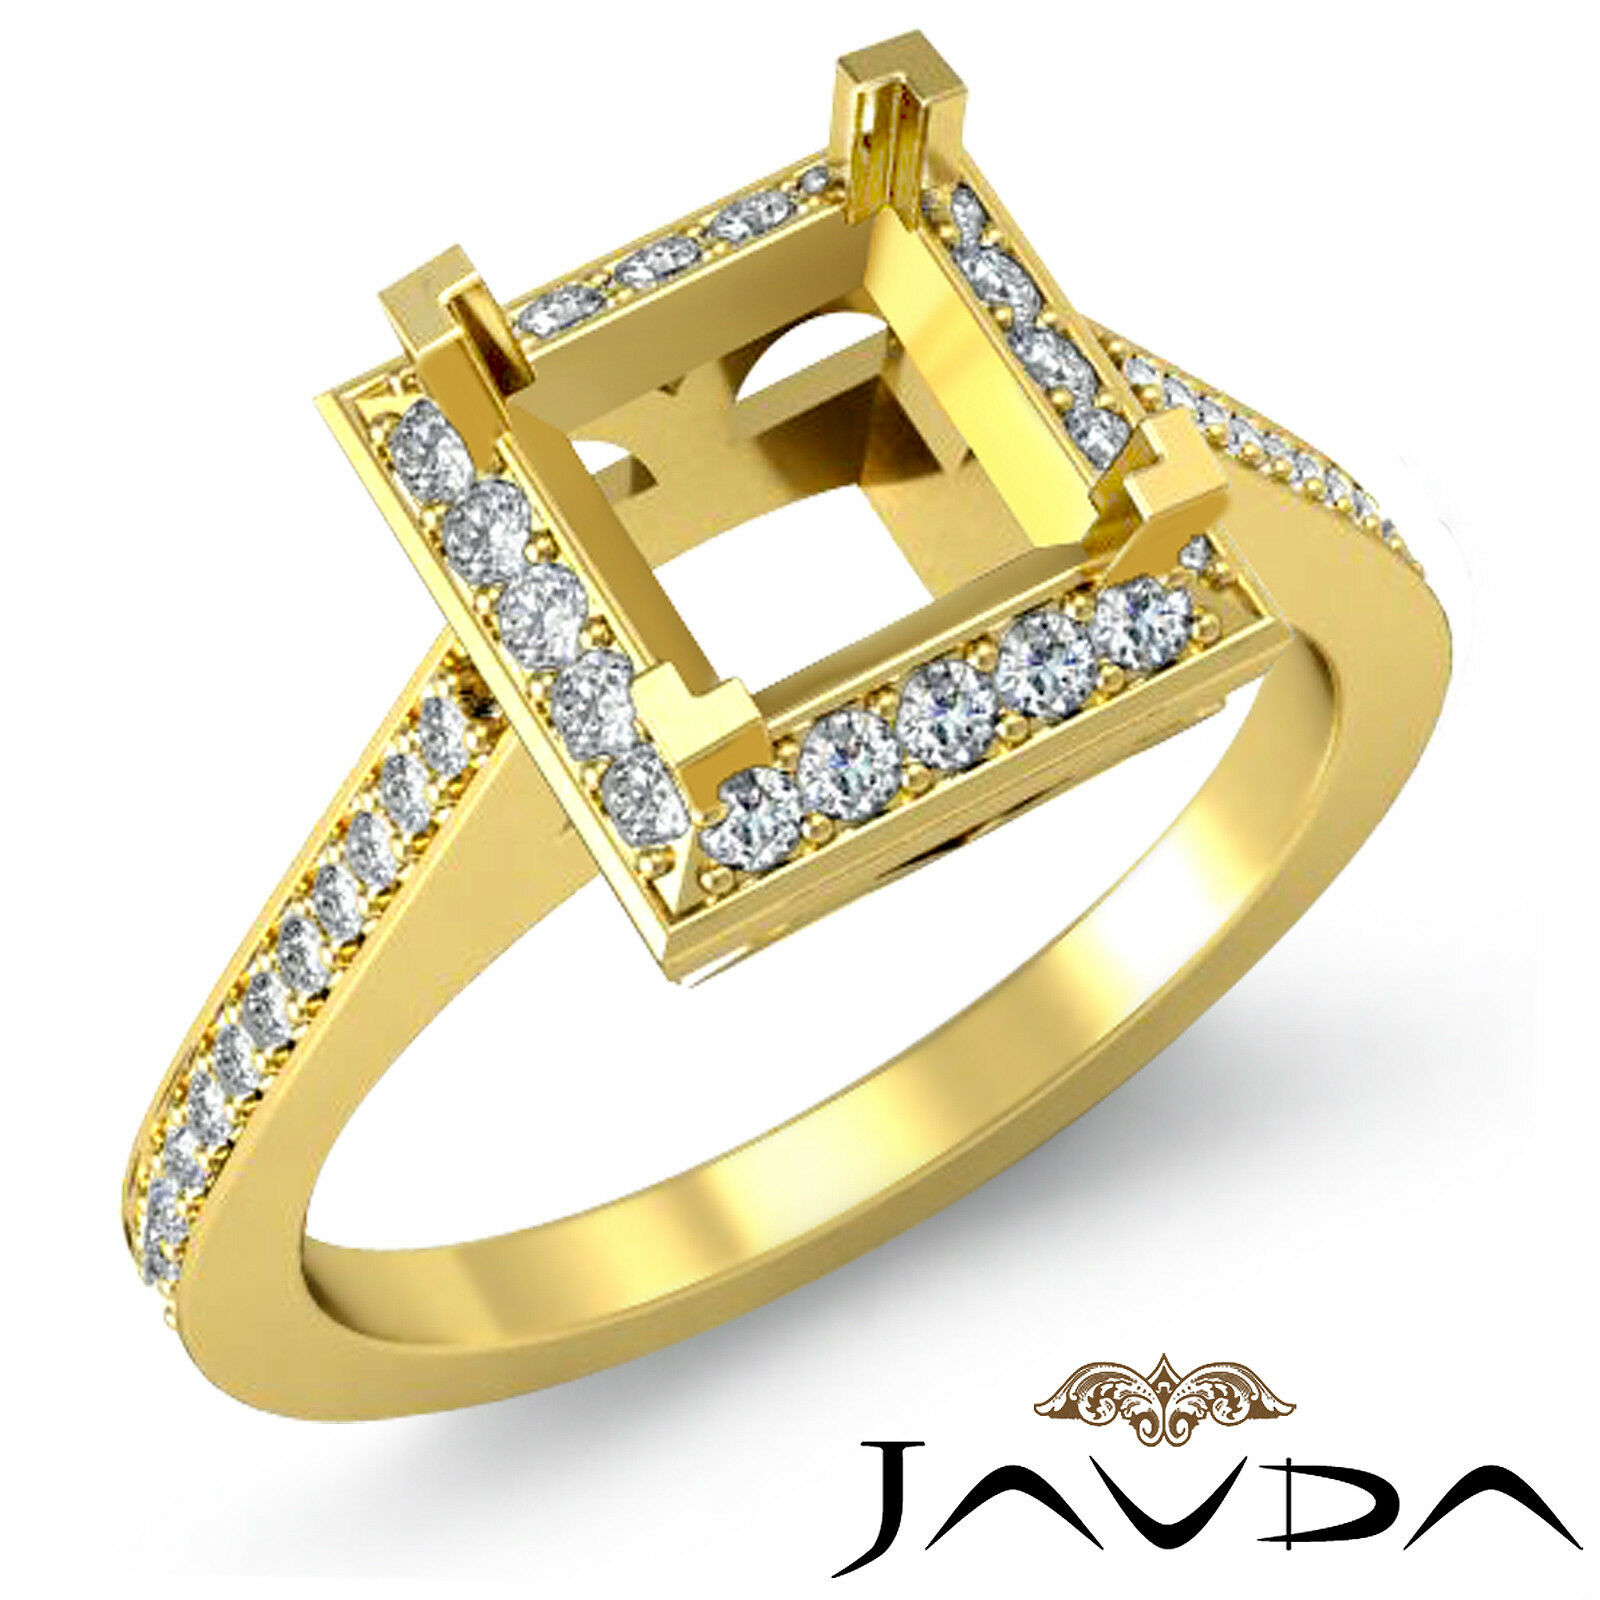 Princess Cut Diamond Engagement Semi Mount Proposed Ring 14k Yellow Gold 0.5ct